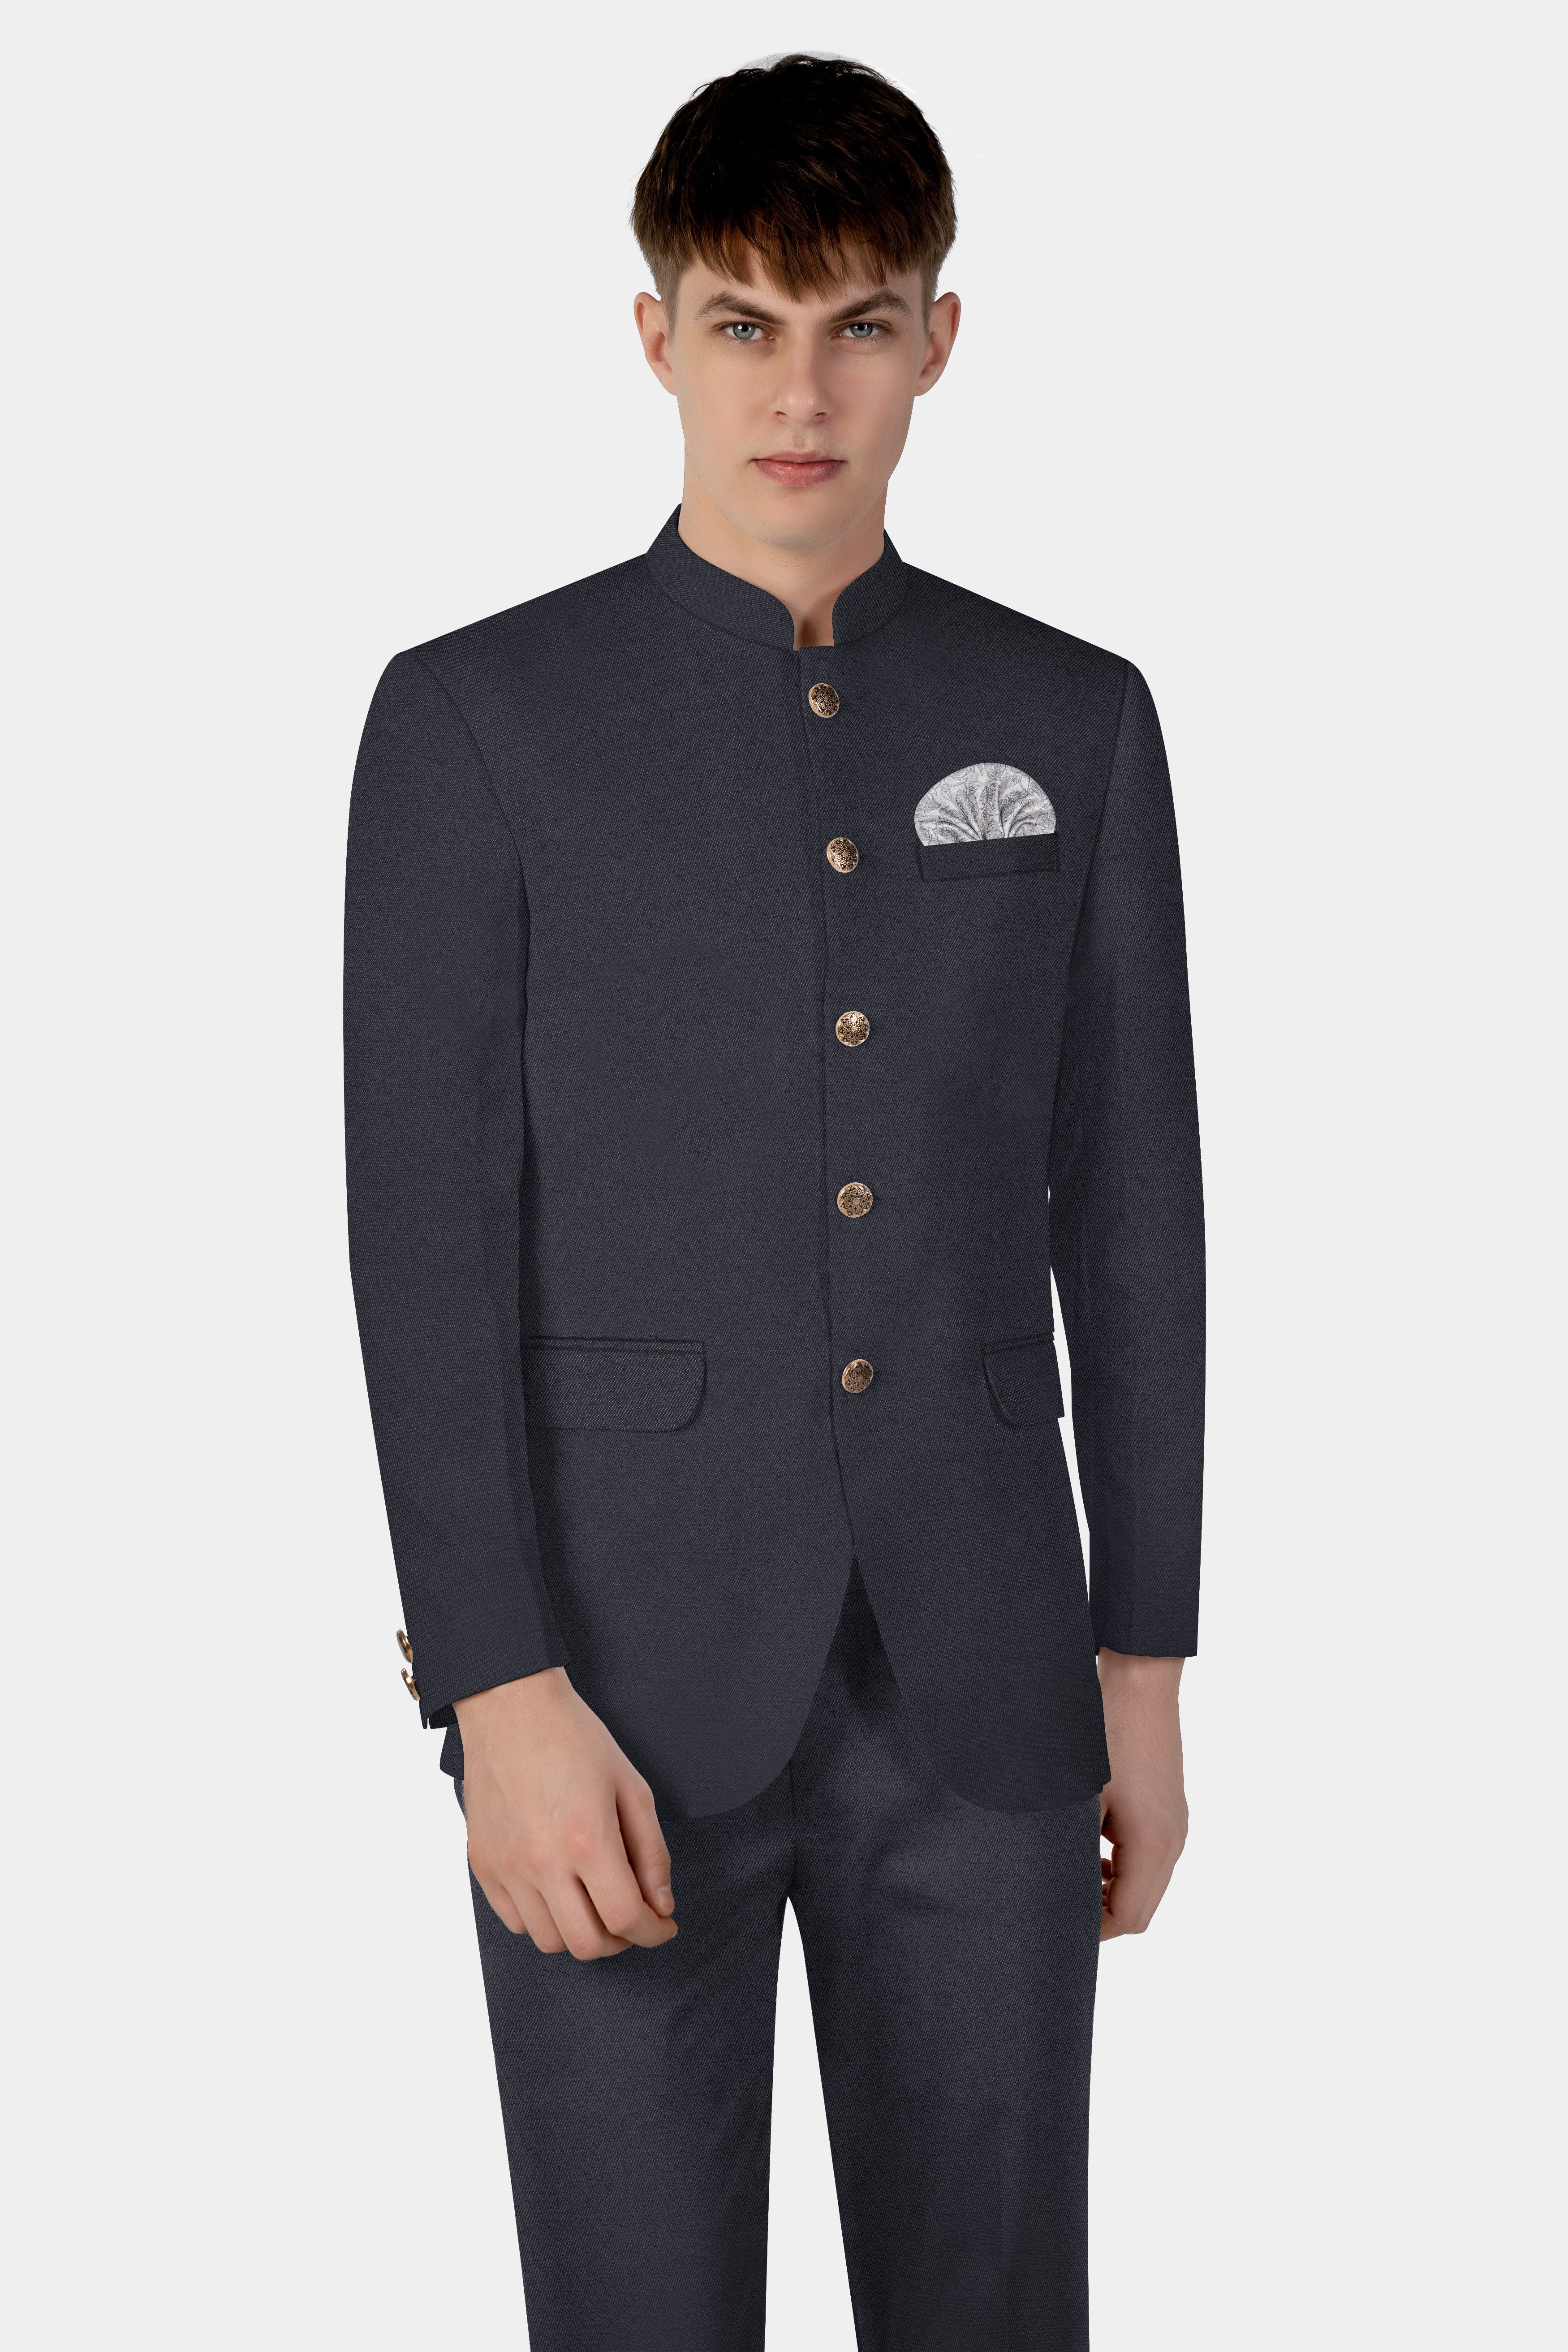 Piano Gray Wool Blend Bandhgala Suit